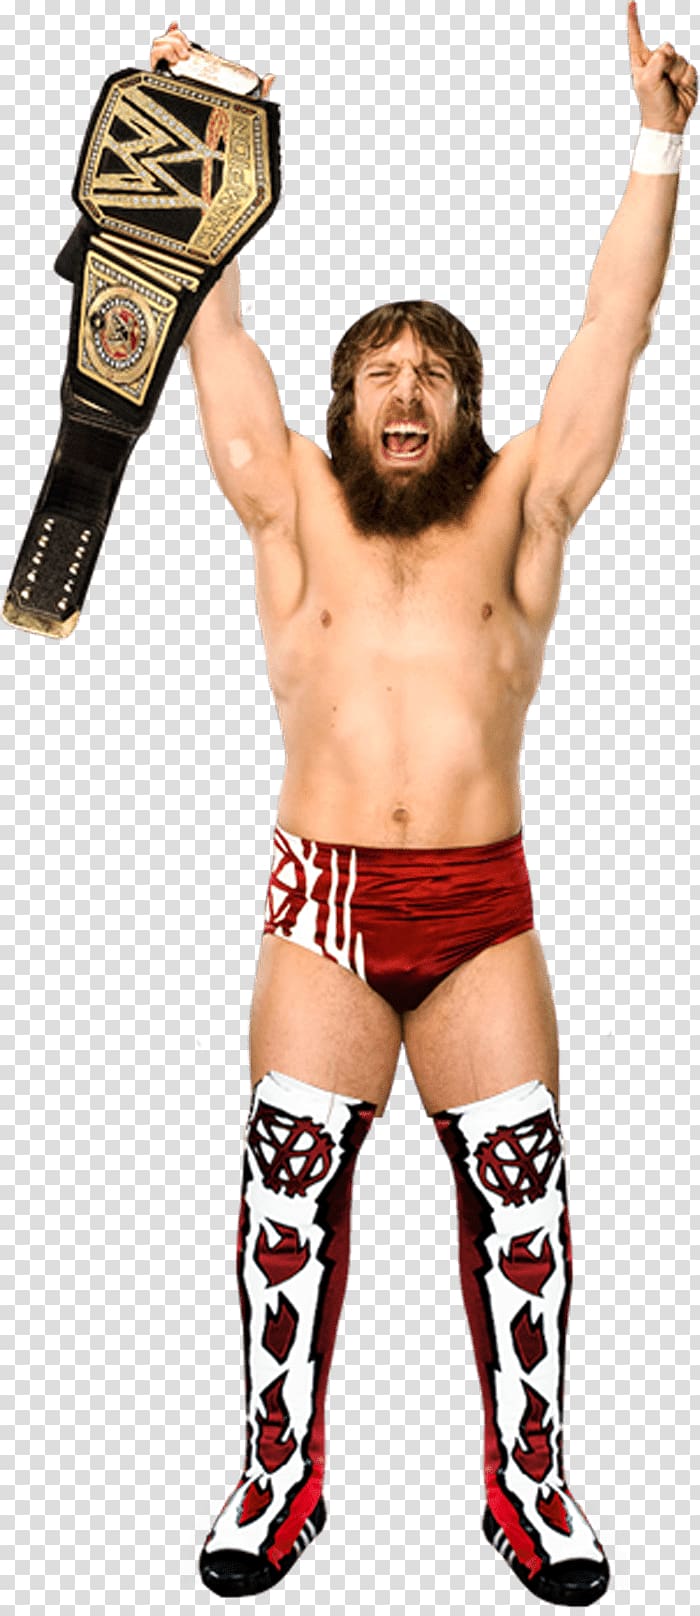 wrestler holding his championship belt, Daniel Bryan Winner With Belt transparent background PNG clipart